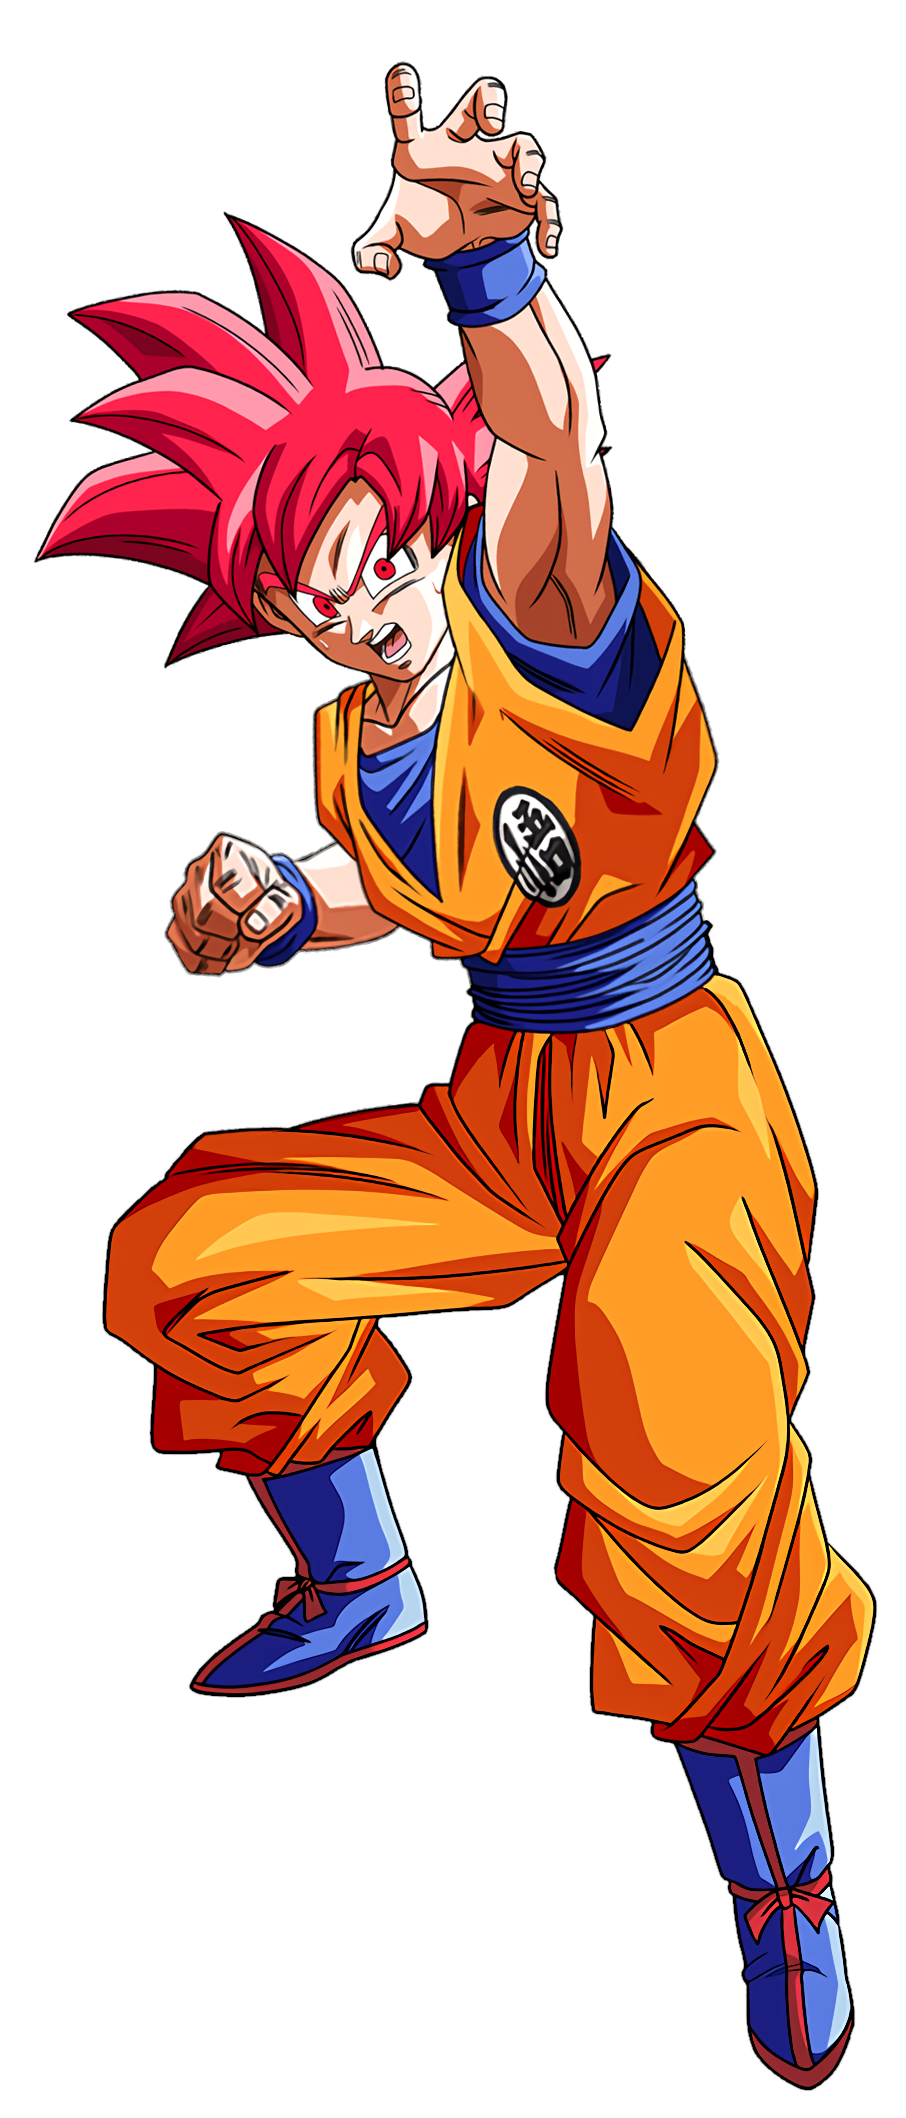 The Super Saiyan God - Goku by icaro382 on DeviantArt